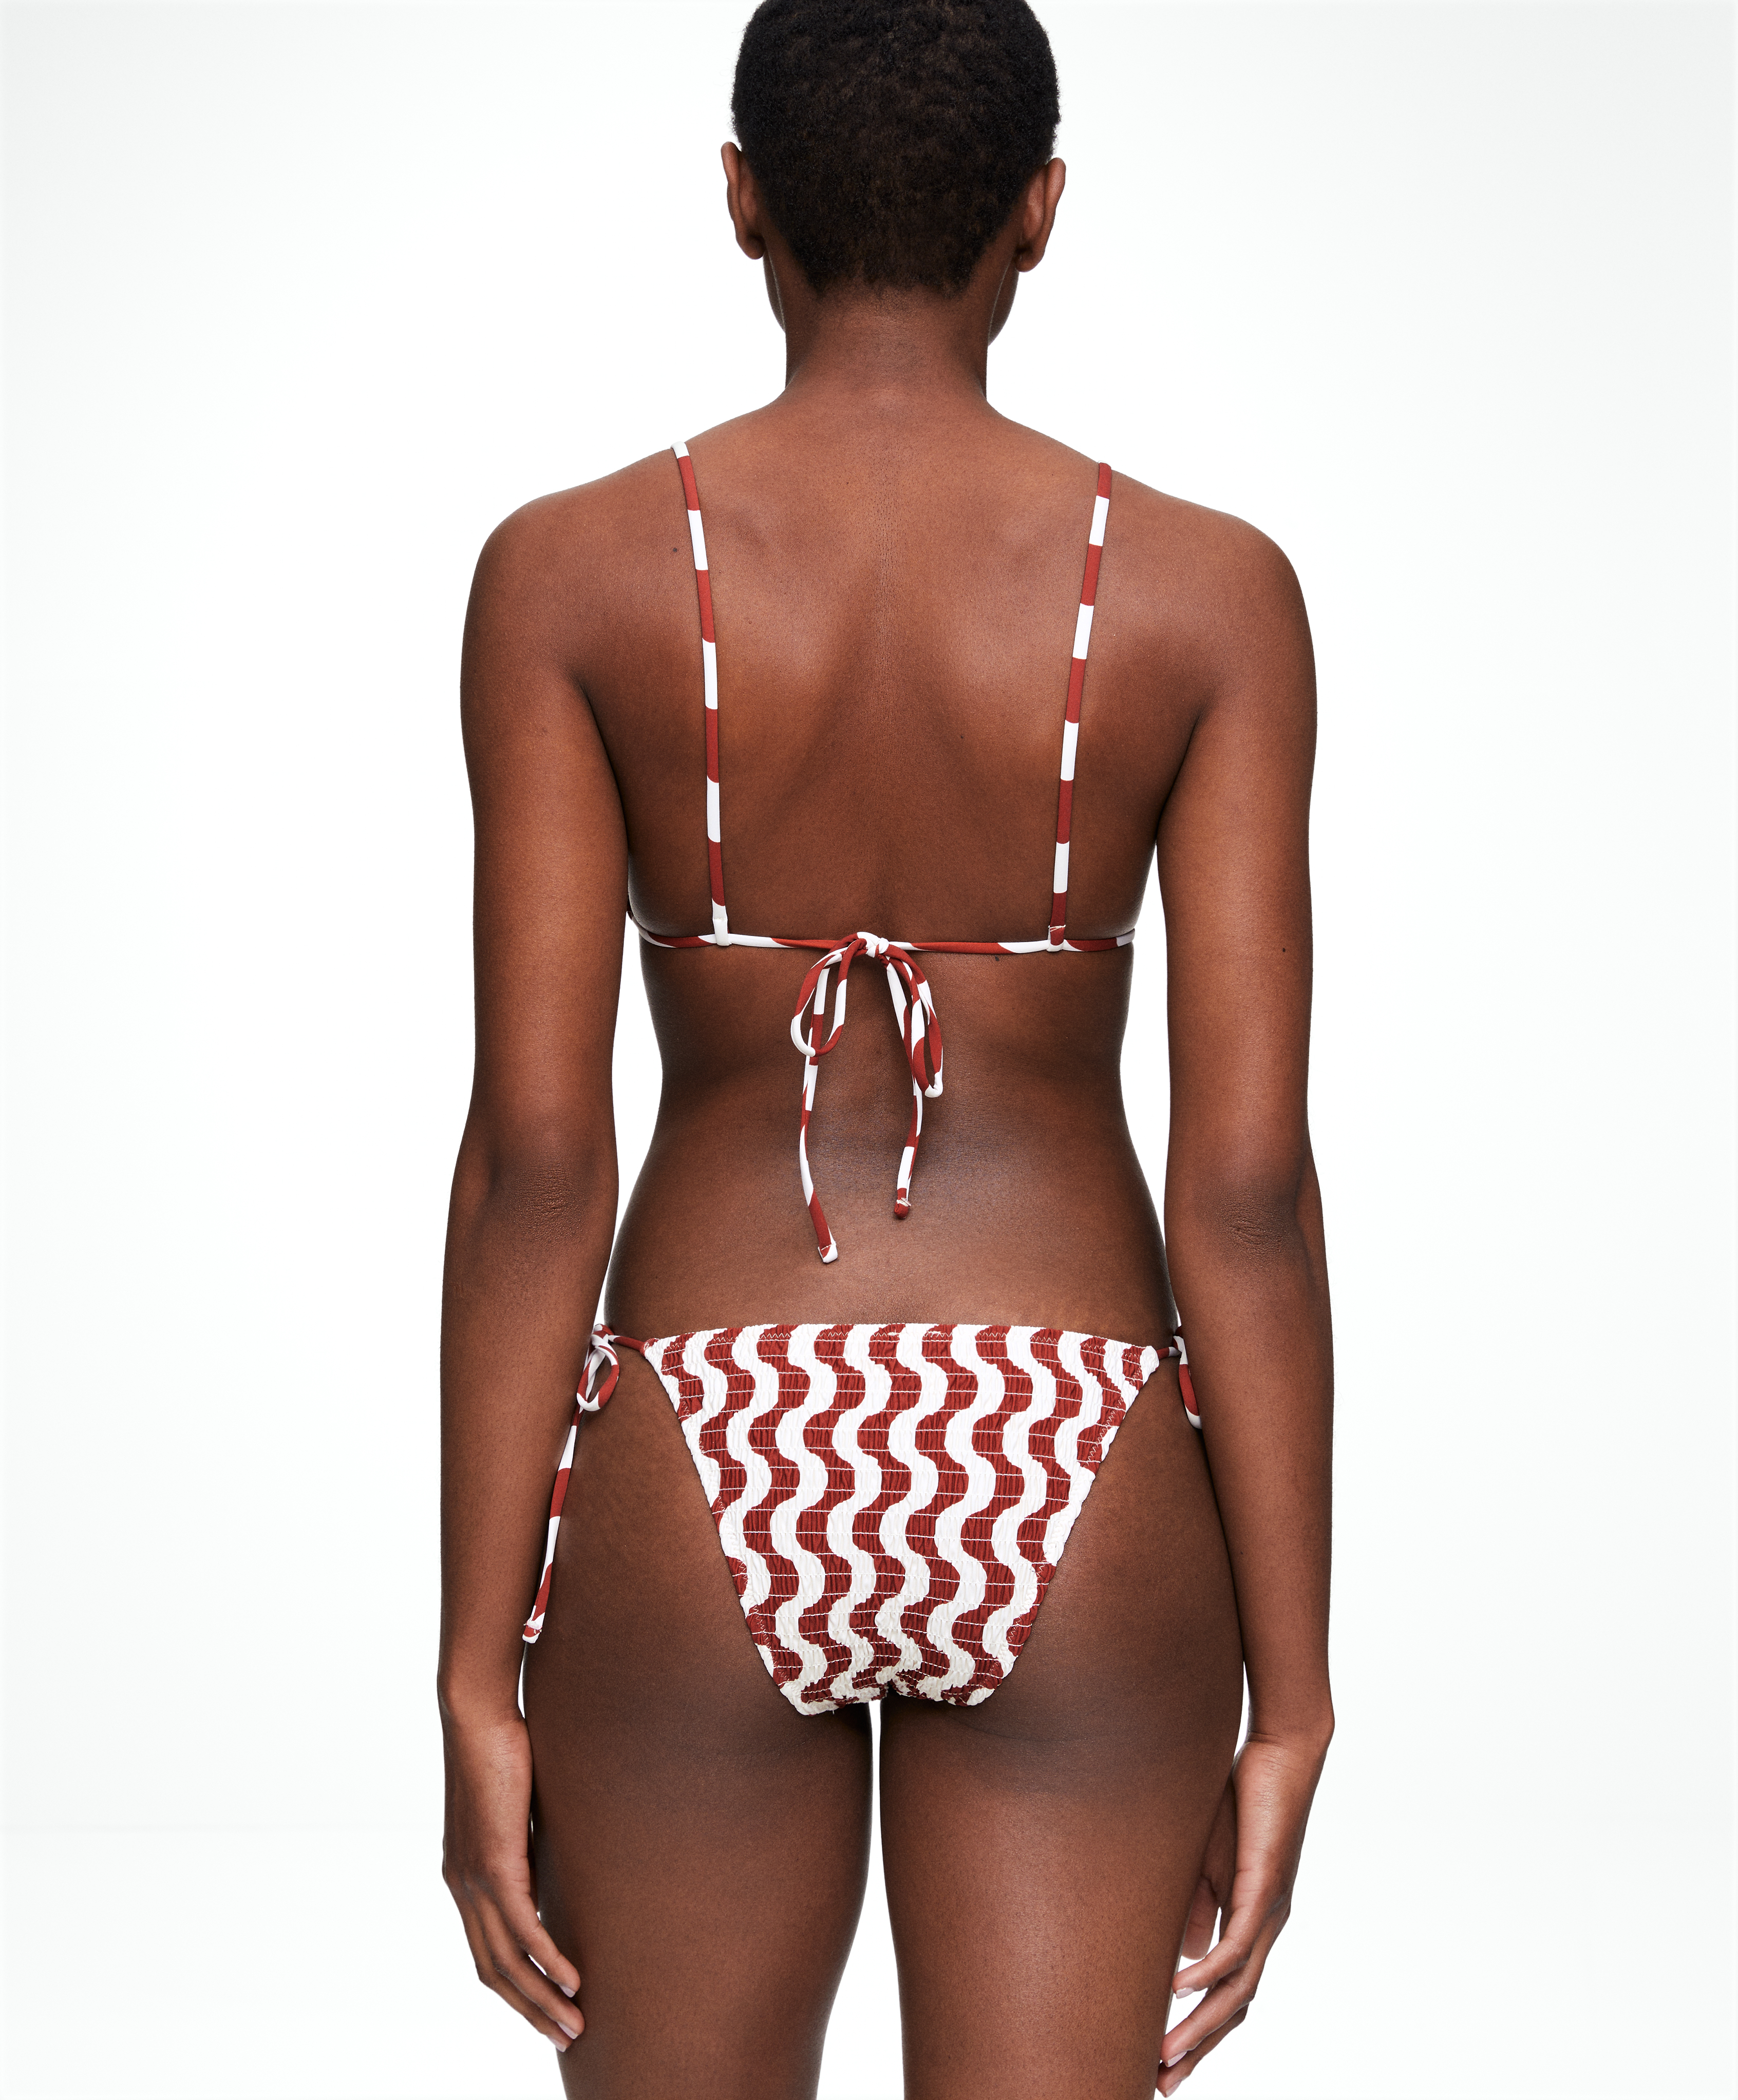 Smock triangle bikini with medium-coverage briefs with ties